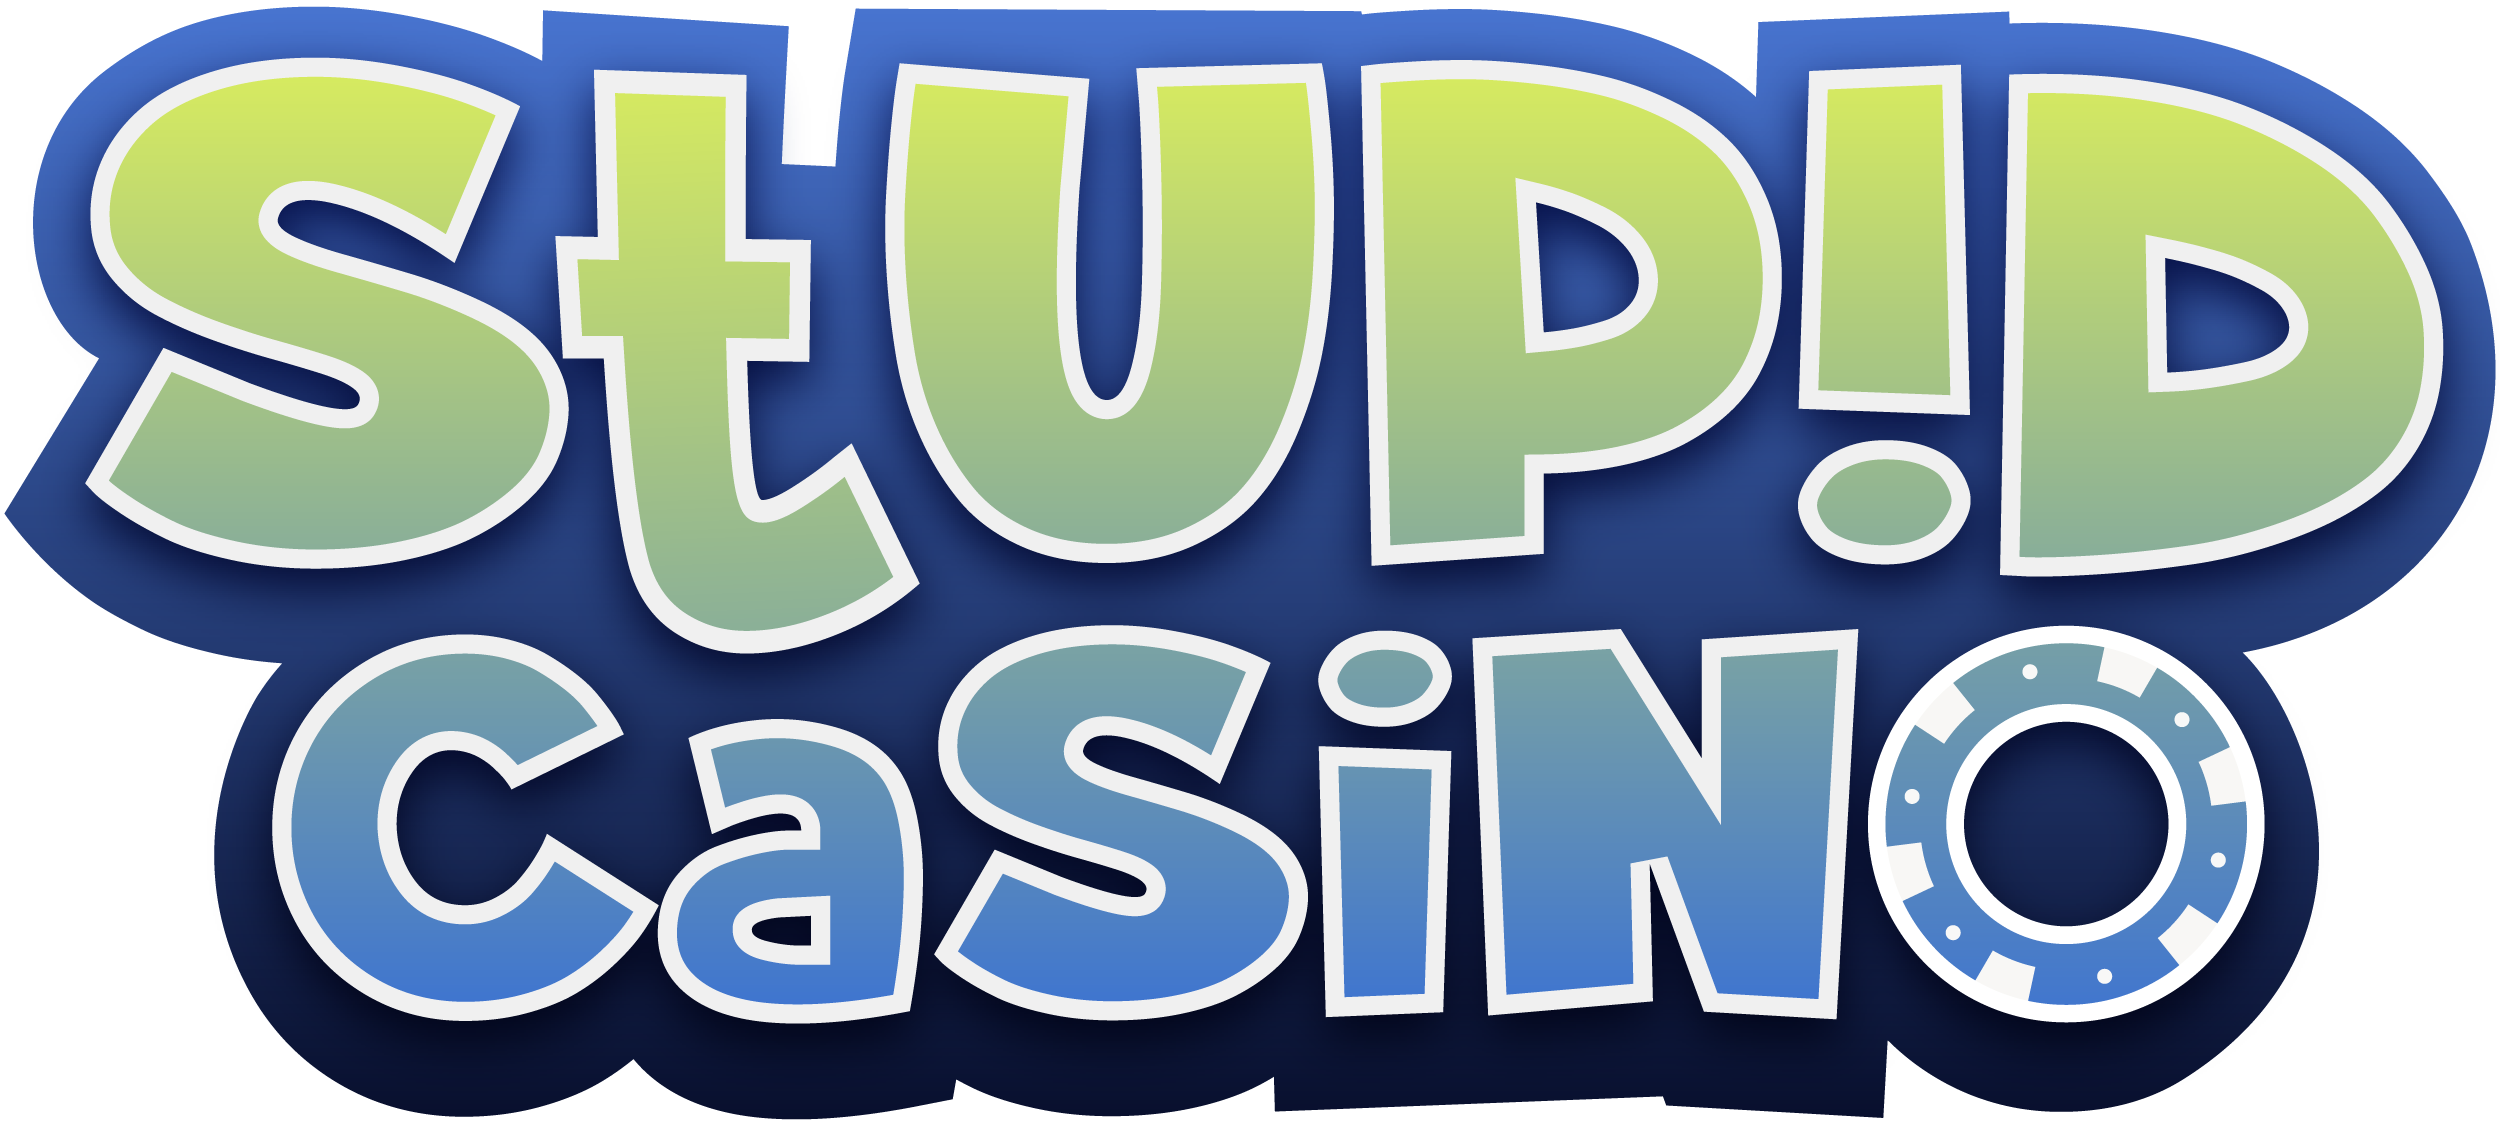 Stupid Casino logotype